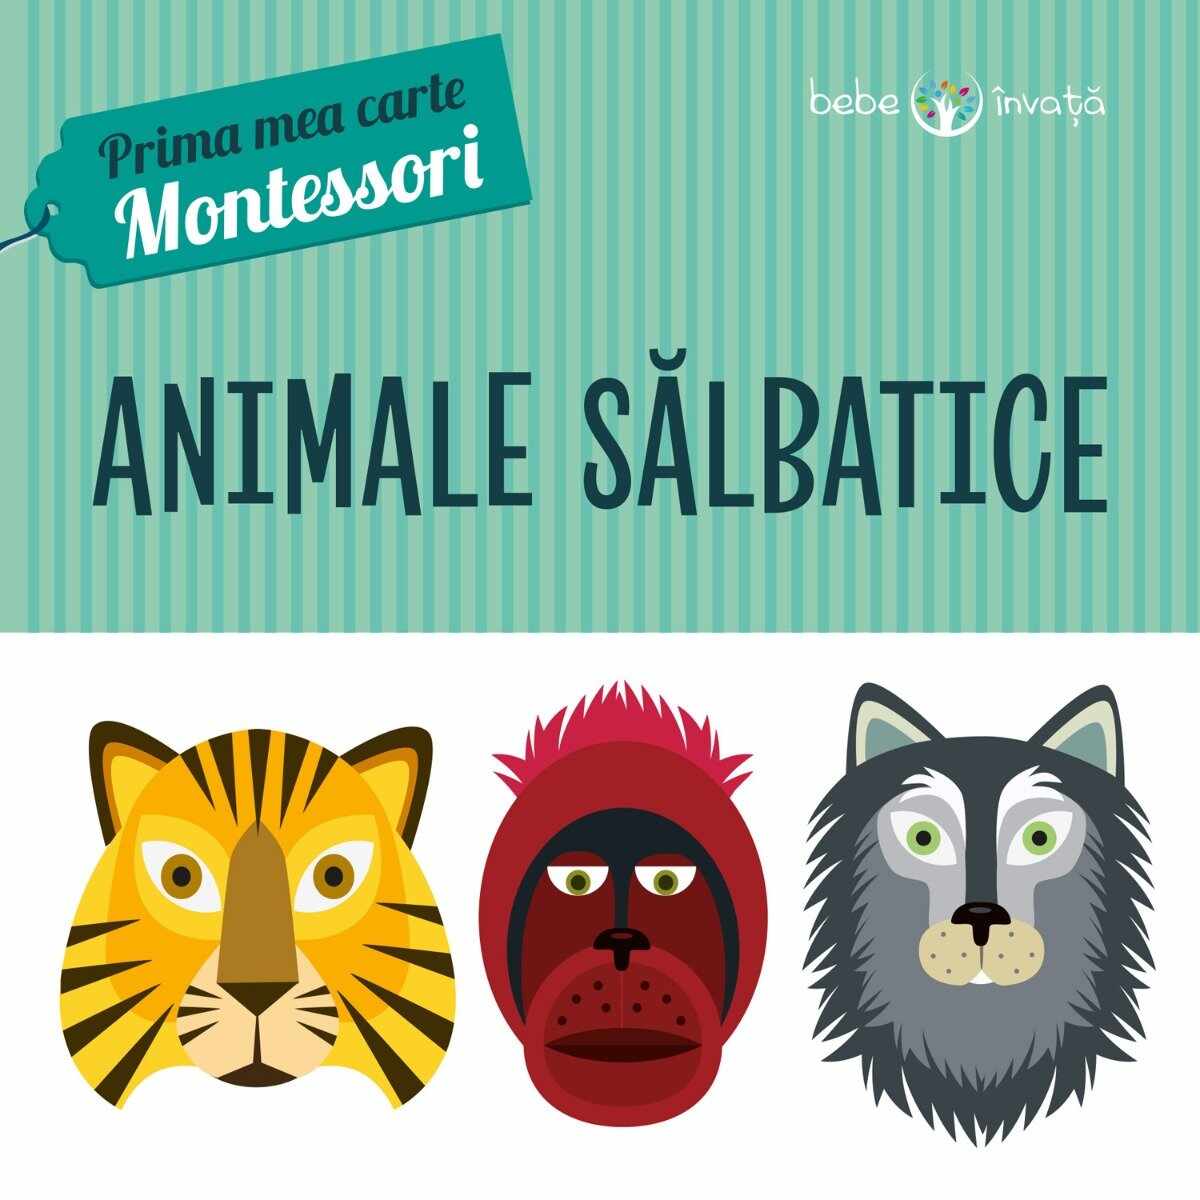 Prima mea carte Montessori - Animale Salbatice